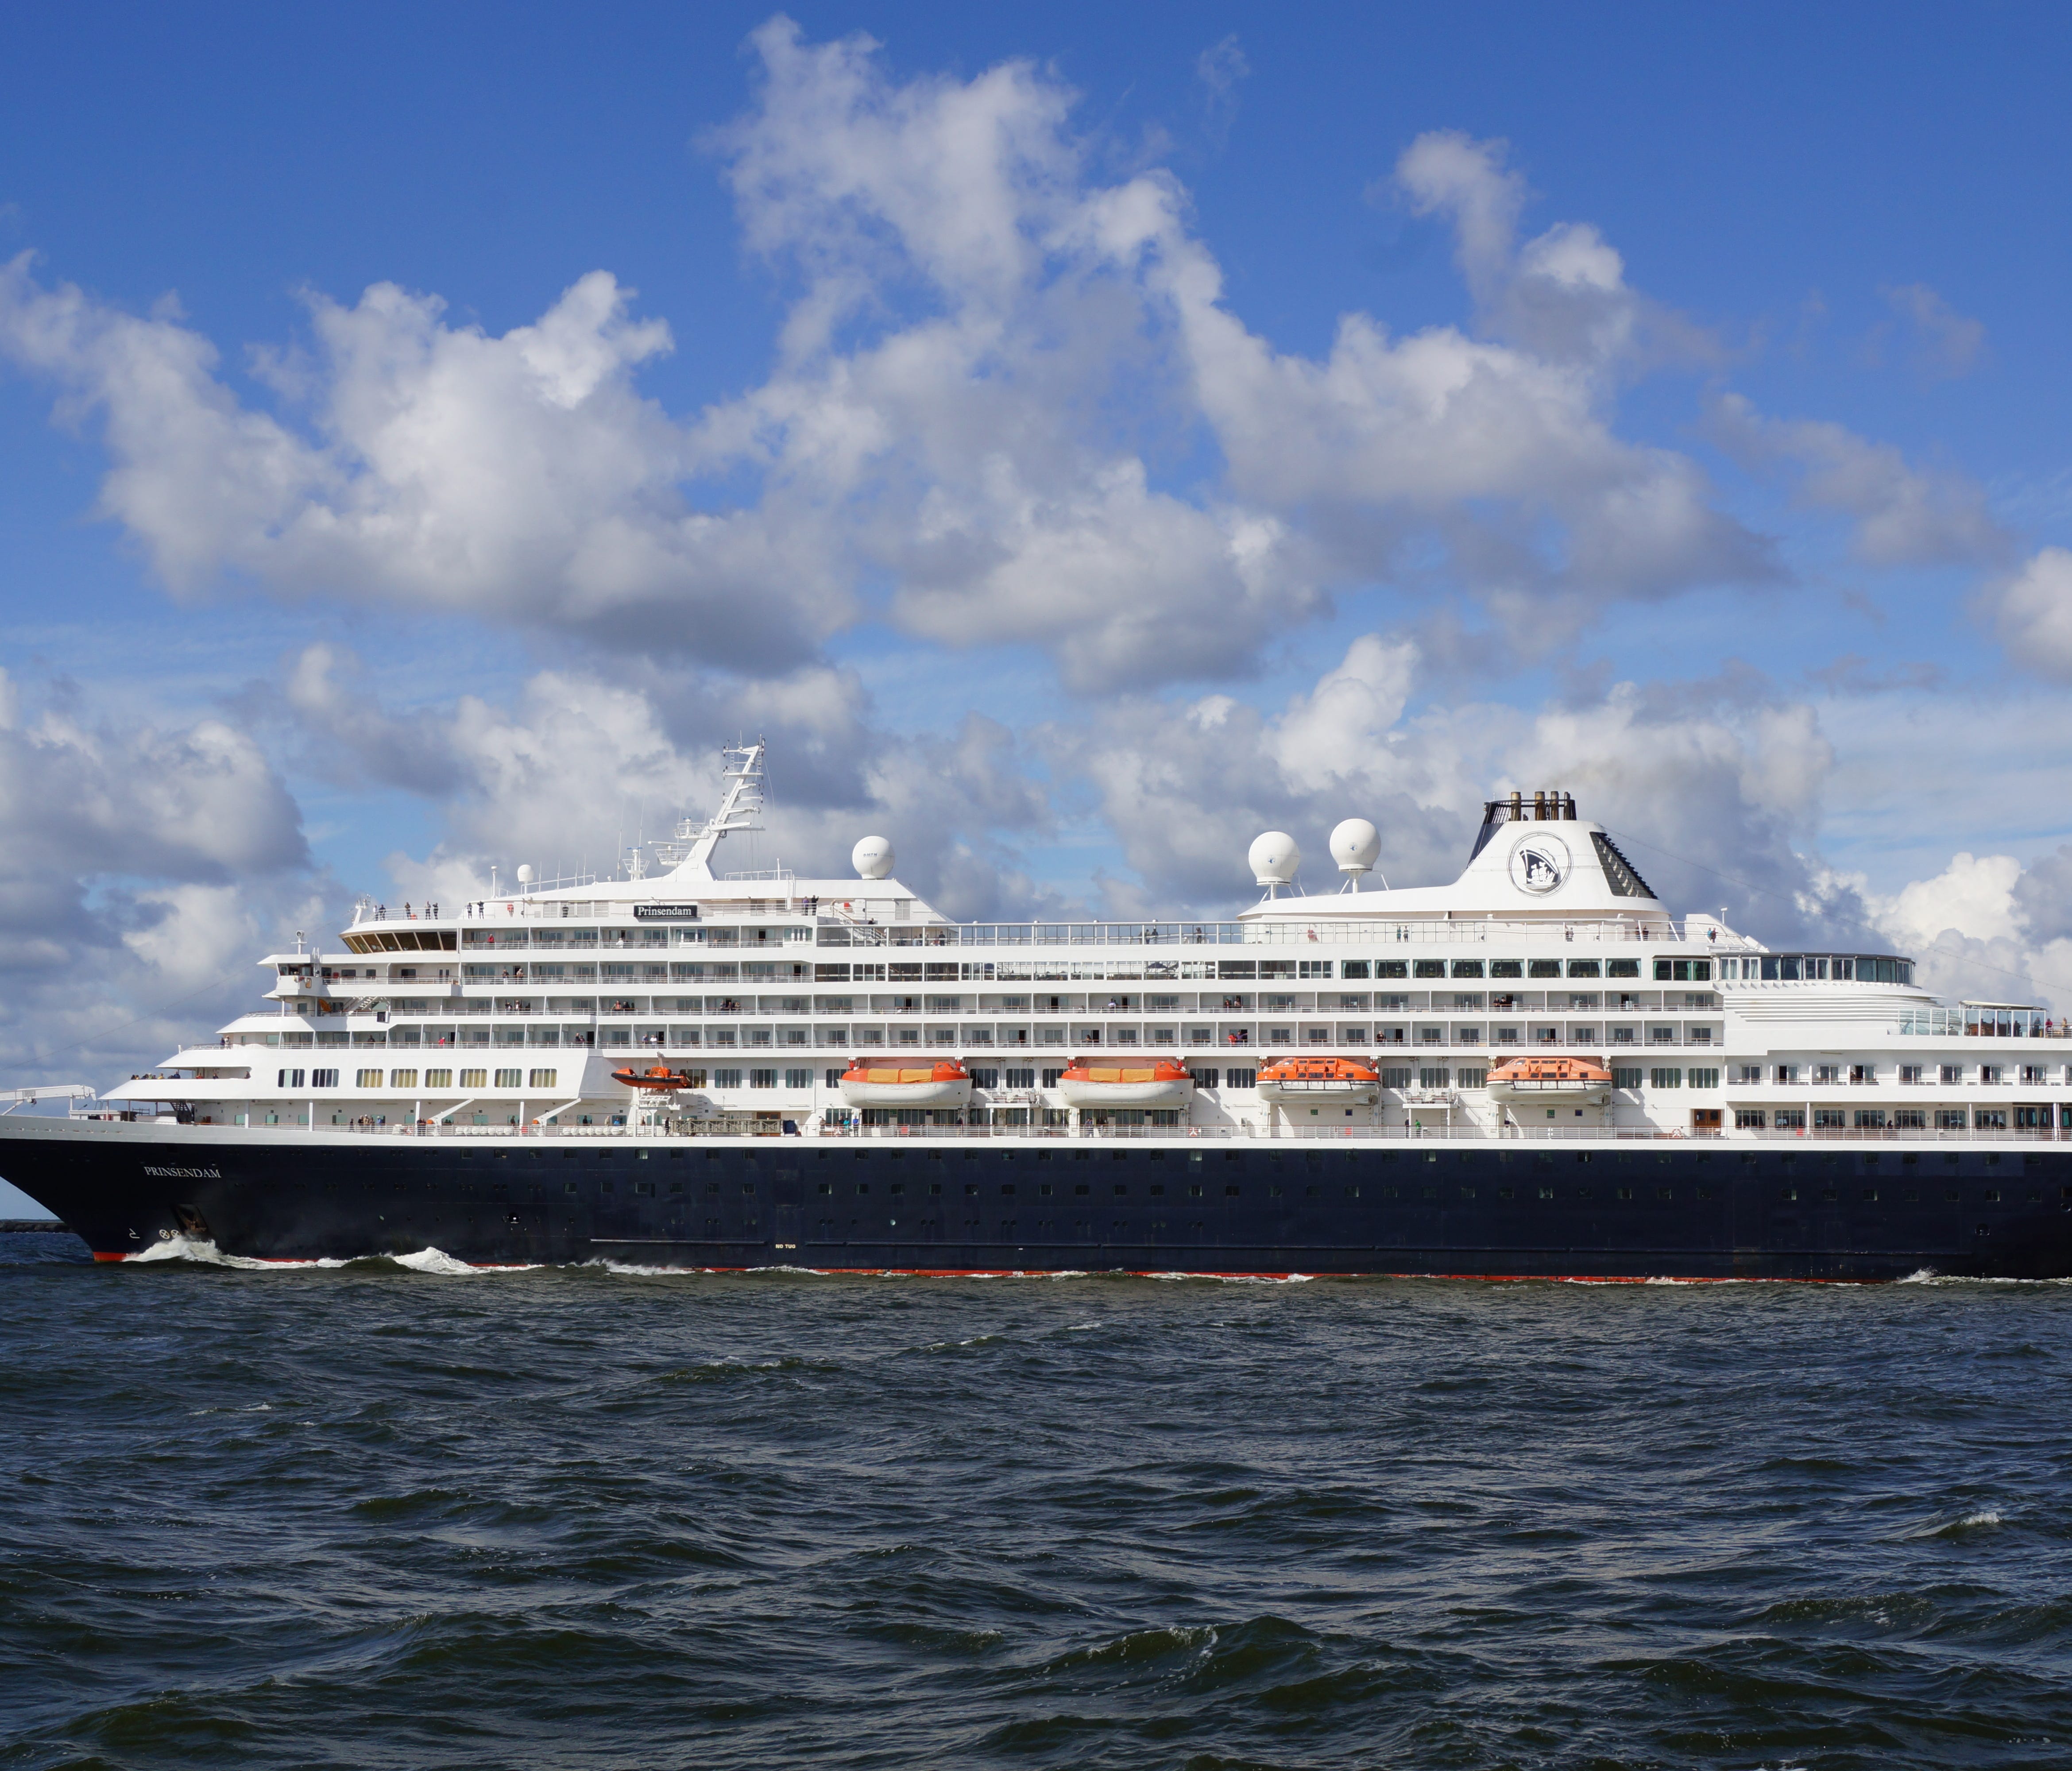 No. 10: MV Prinsendam. Holland America Line's smallest ship, the 38,848-gt, 740-guest Prinsendam, is nicknamed 